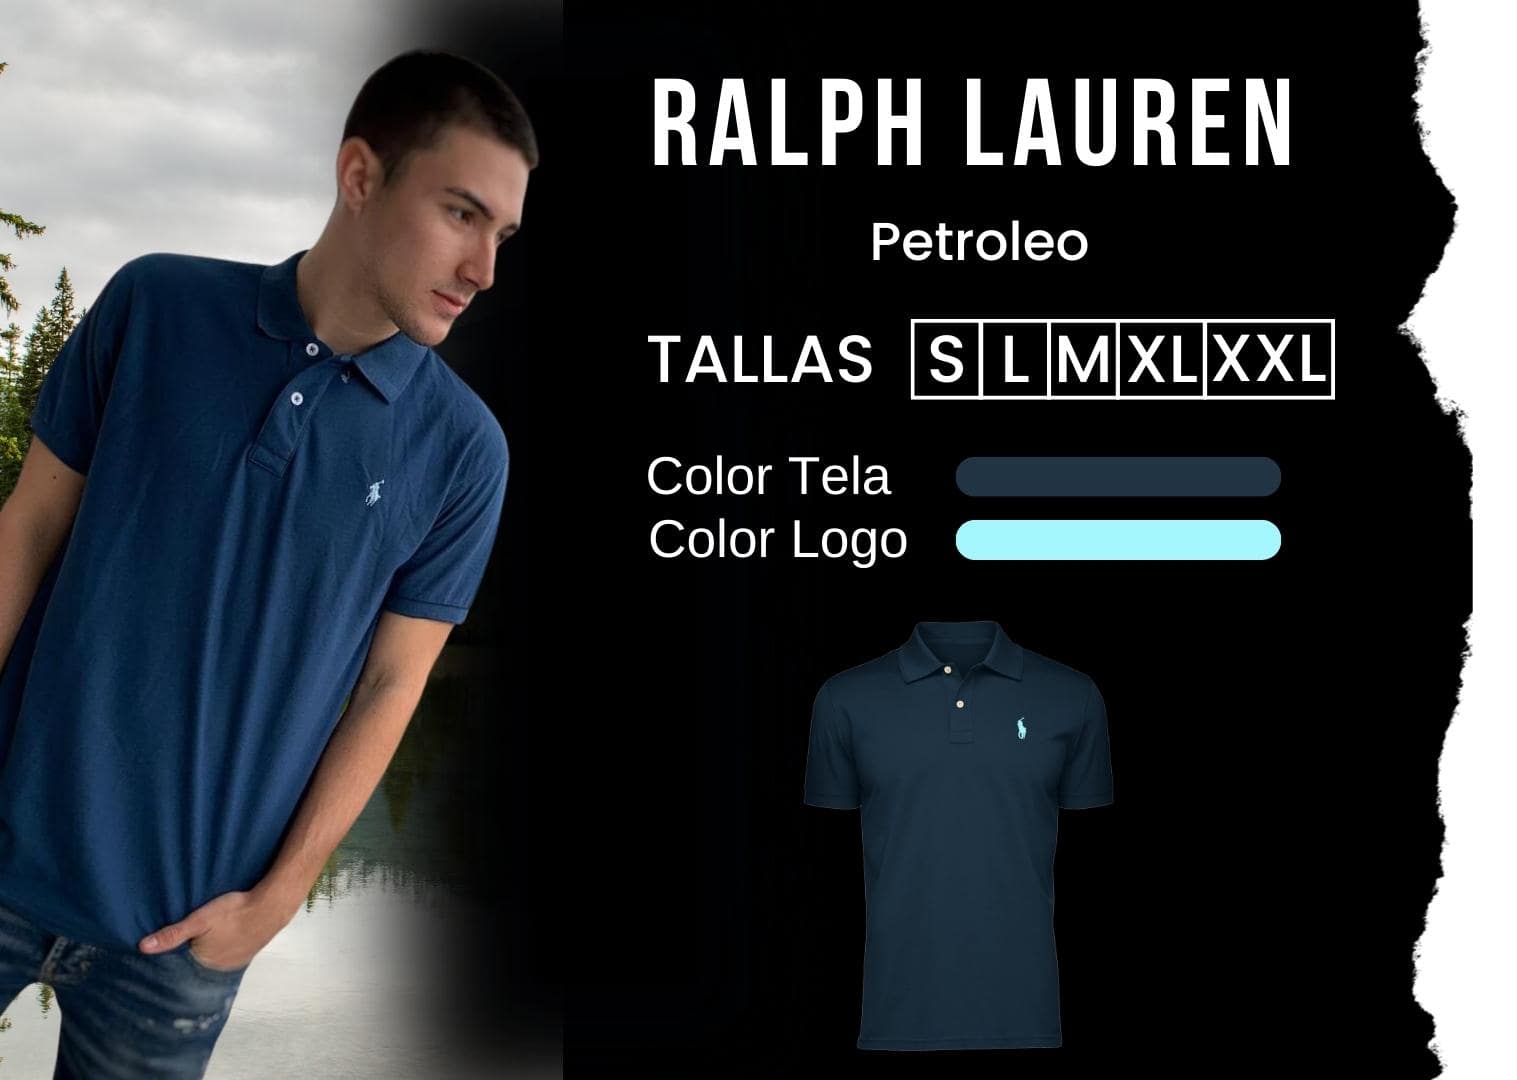 camiseta Ralph Lauren polo hombre tienda olevan color petroleo 2